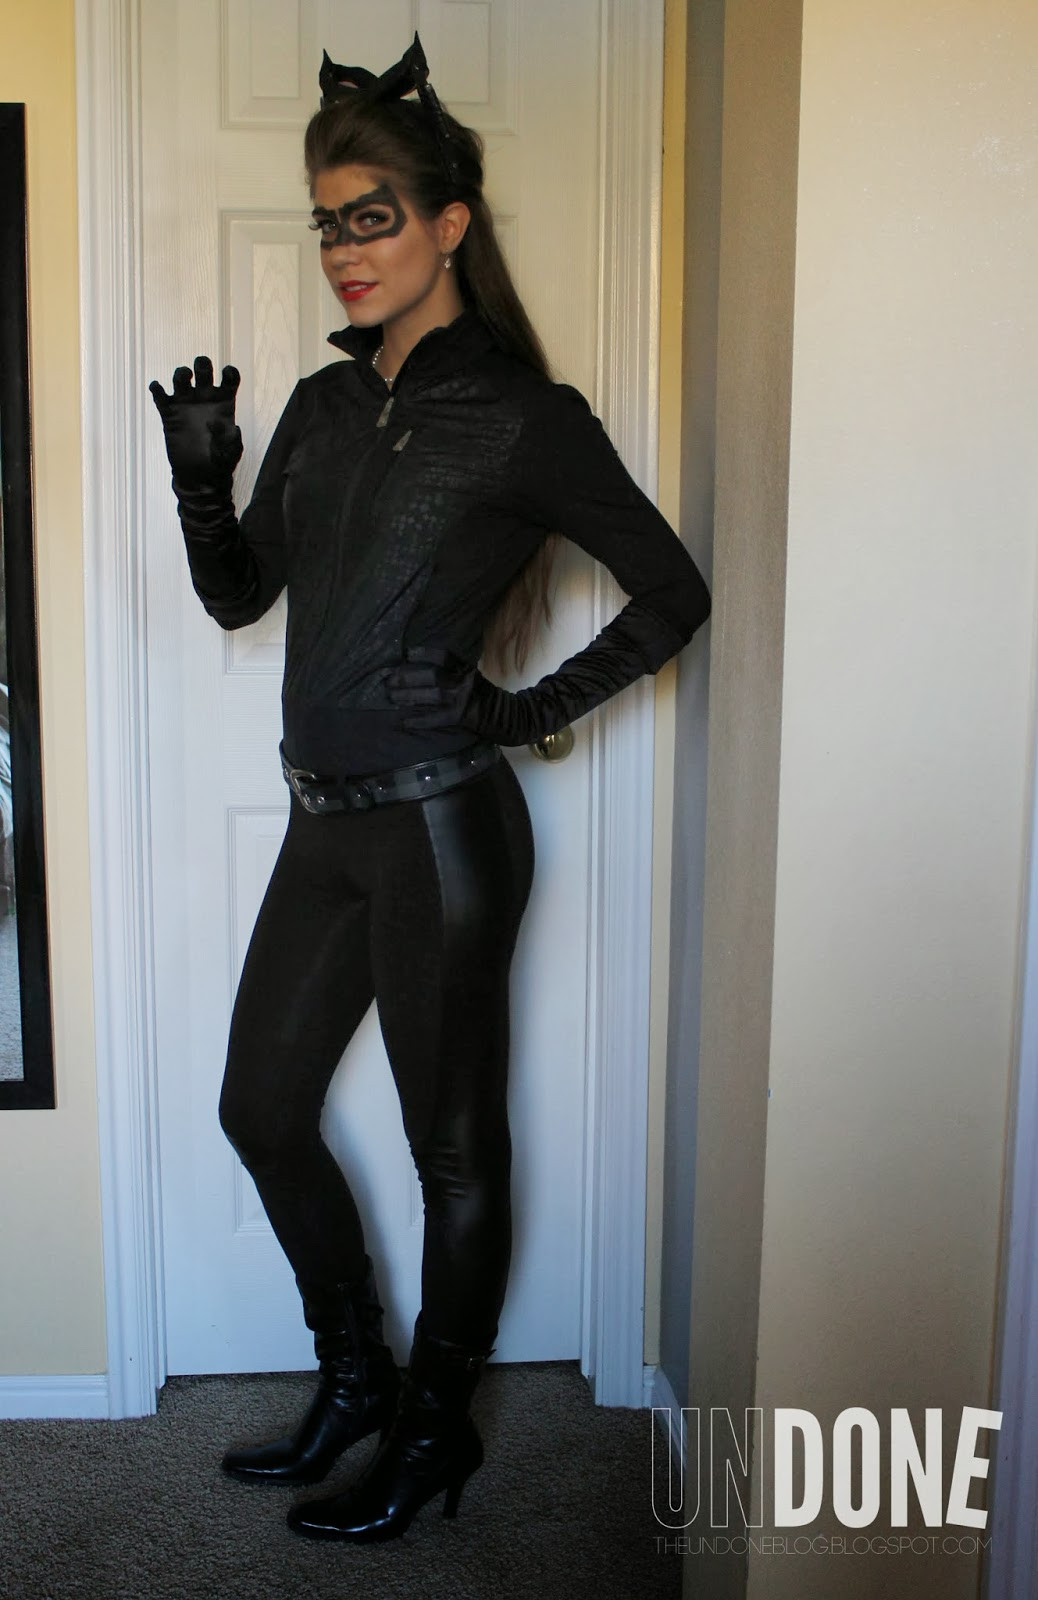 DIY Catwoman Costume
 Undone